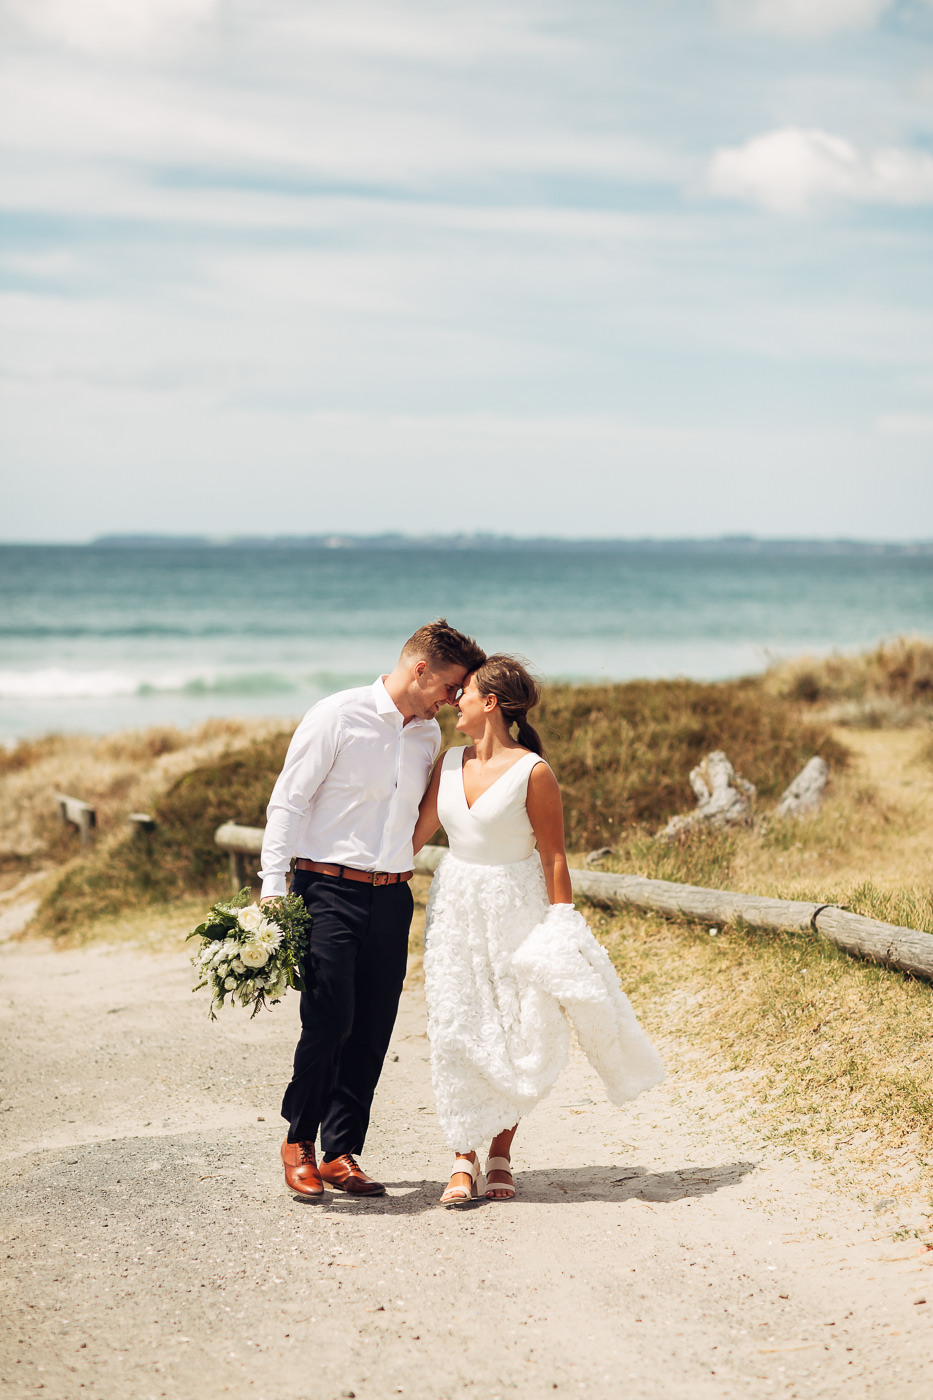 Anne-Hilde & Pieter - januarbryllup i slående vakre Tauranga, New Zealand Bryllupsfotograf New Zealand strand 10 Fotografering